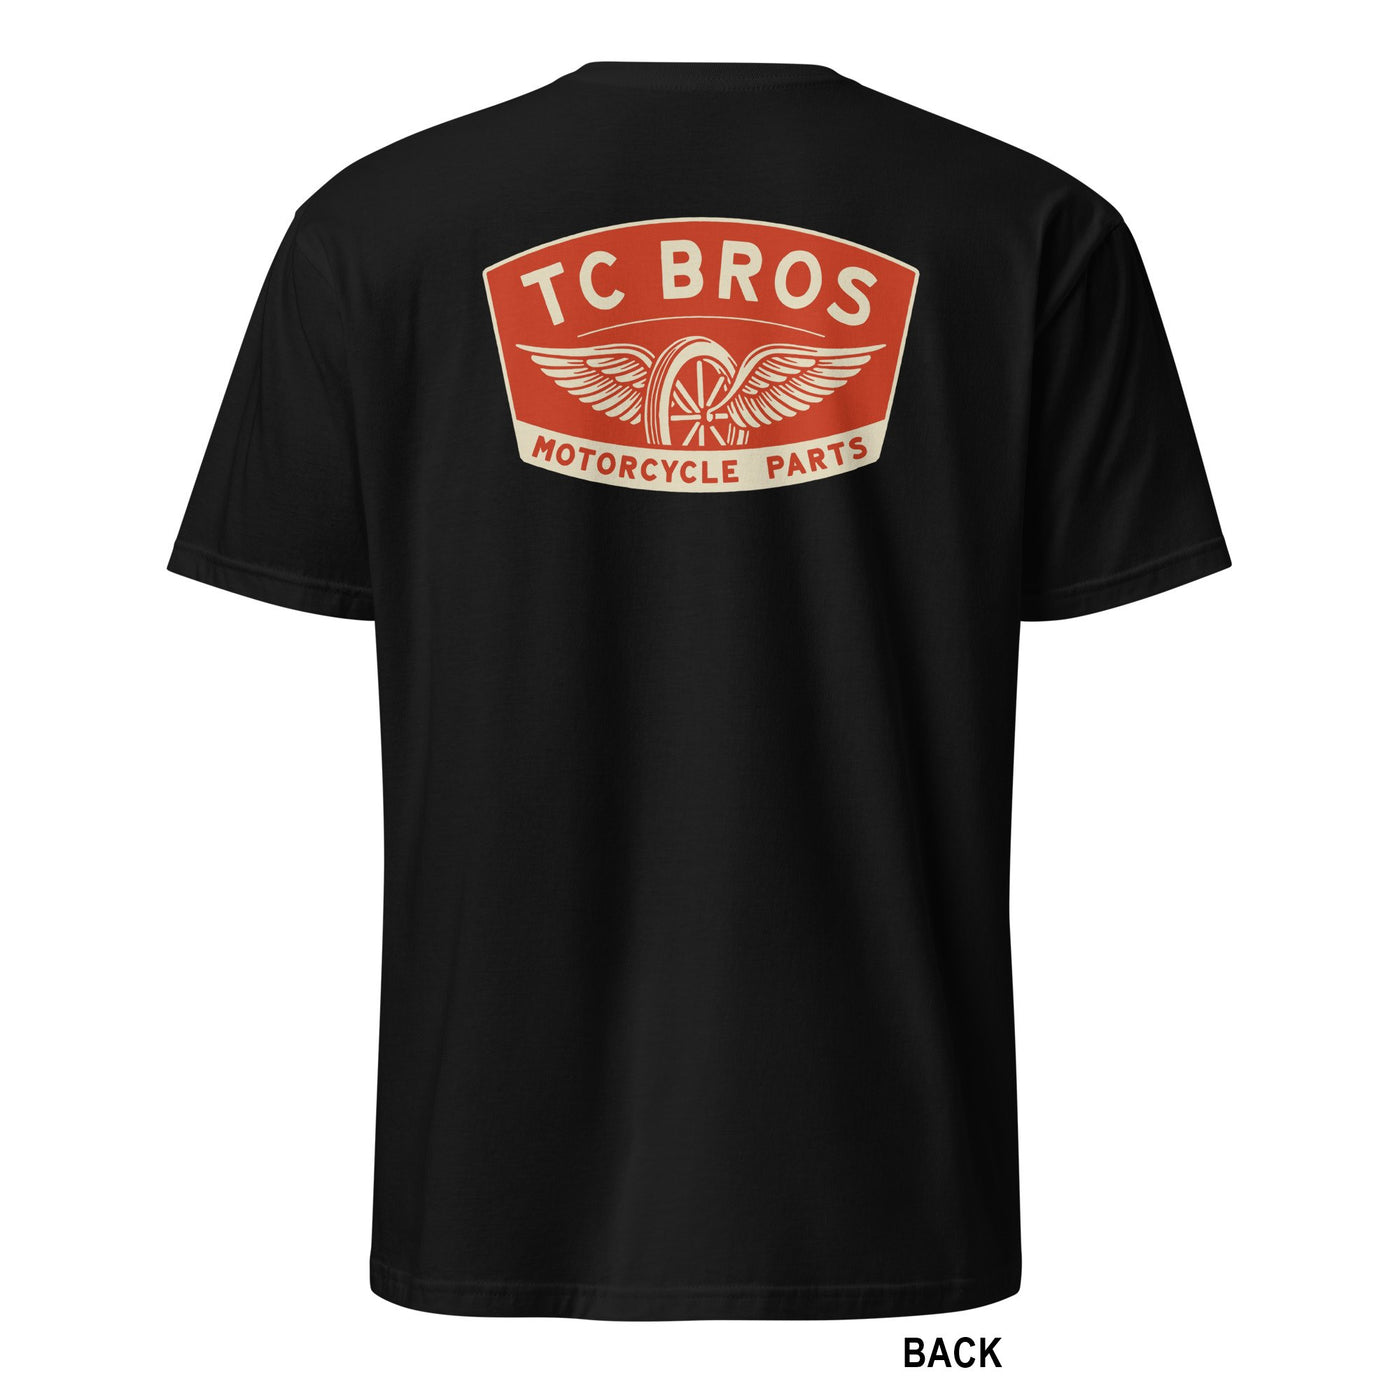 A TC Bros. Winged Wheel T-Shirt - Black made of ring-spun cotton with an orange logo.